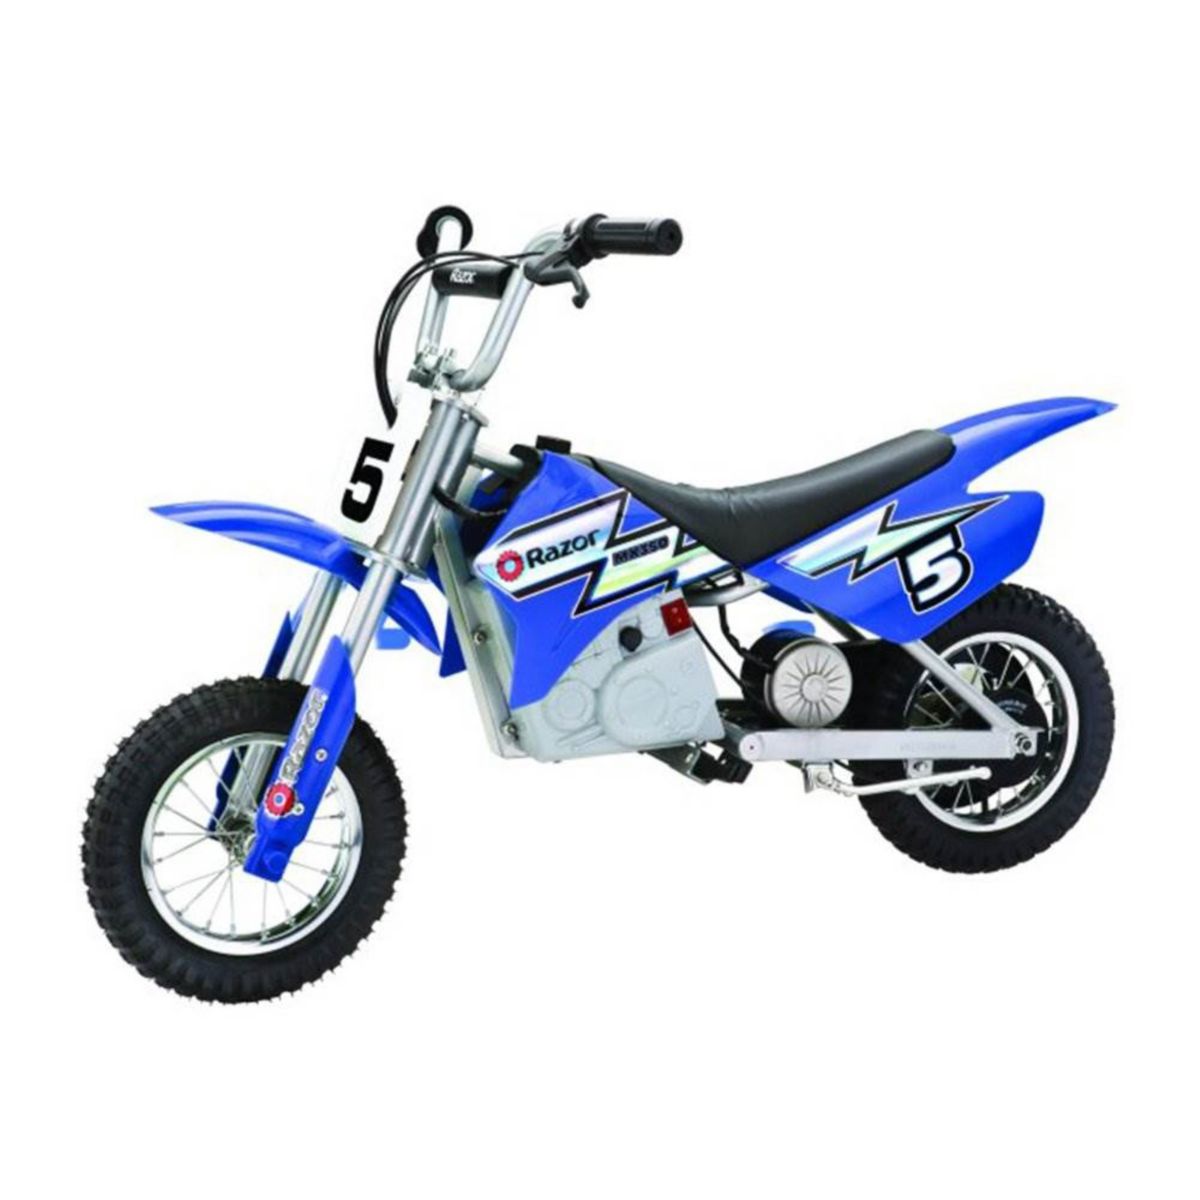 Razor MX350 Dirt Rocket 24V Electric Toy Motocross Motorcycle Dirt Bike, Blue RAZOR